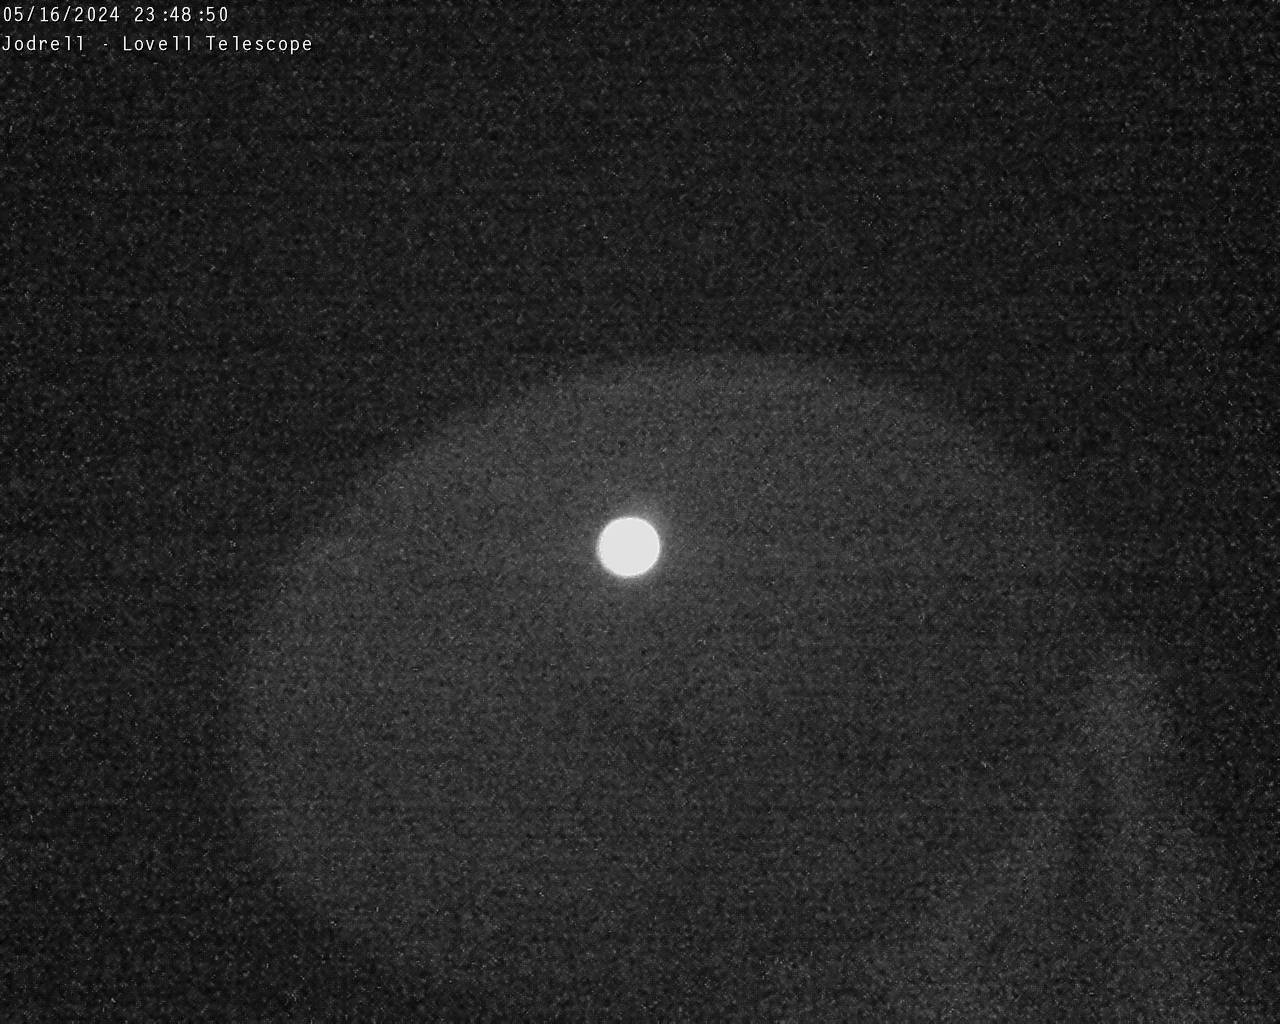 Observatorio Jodrell Bank Vie. 23:49